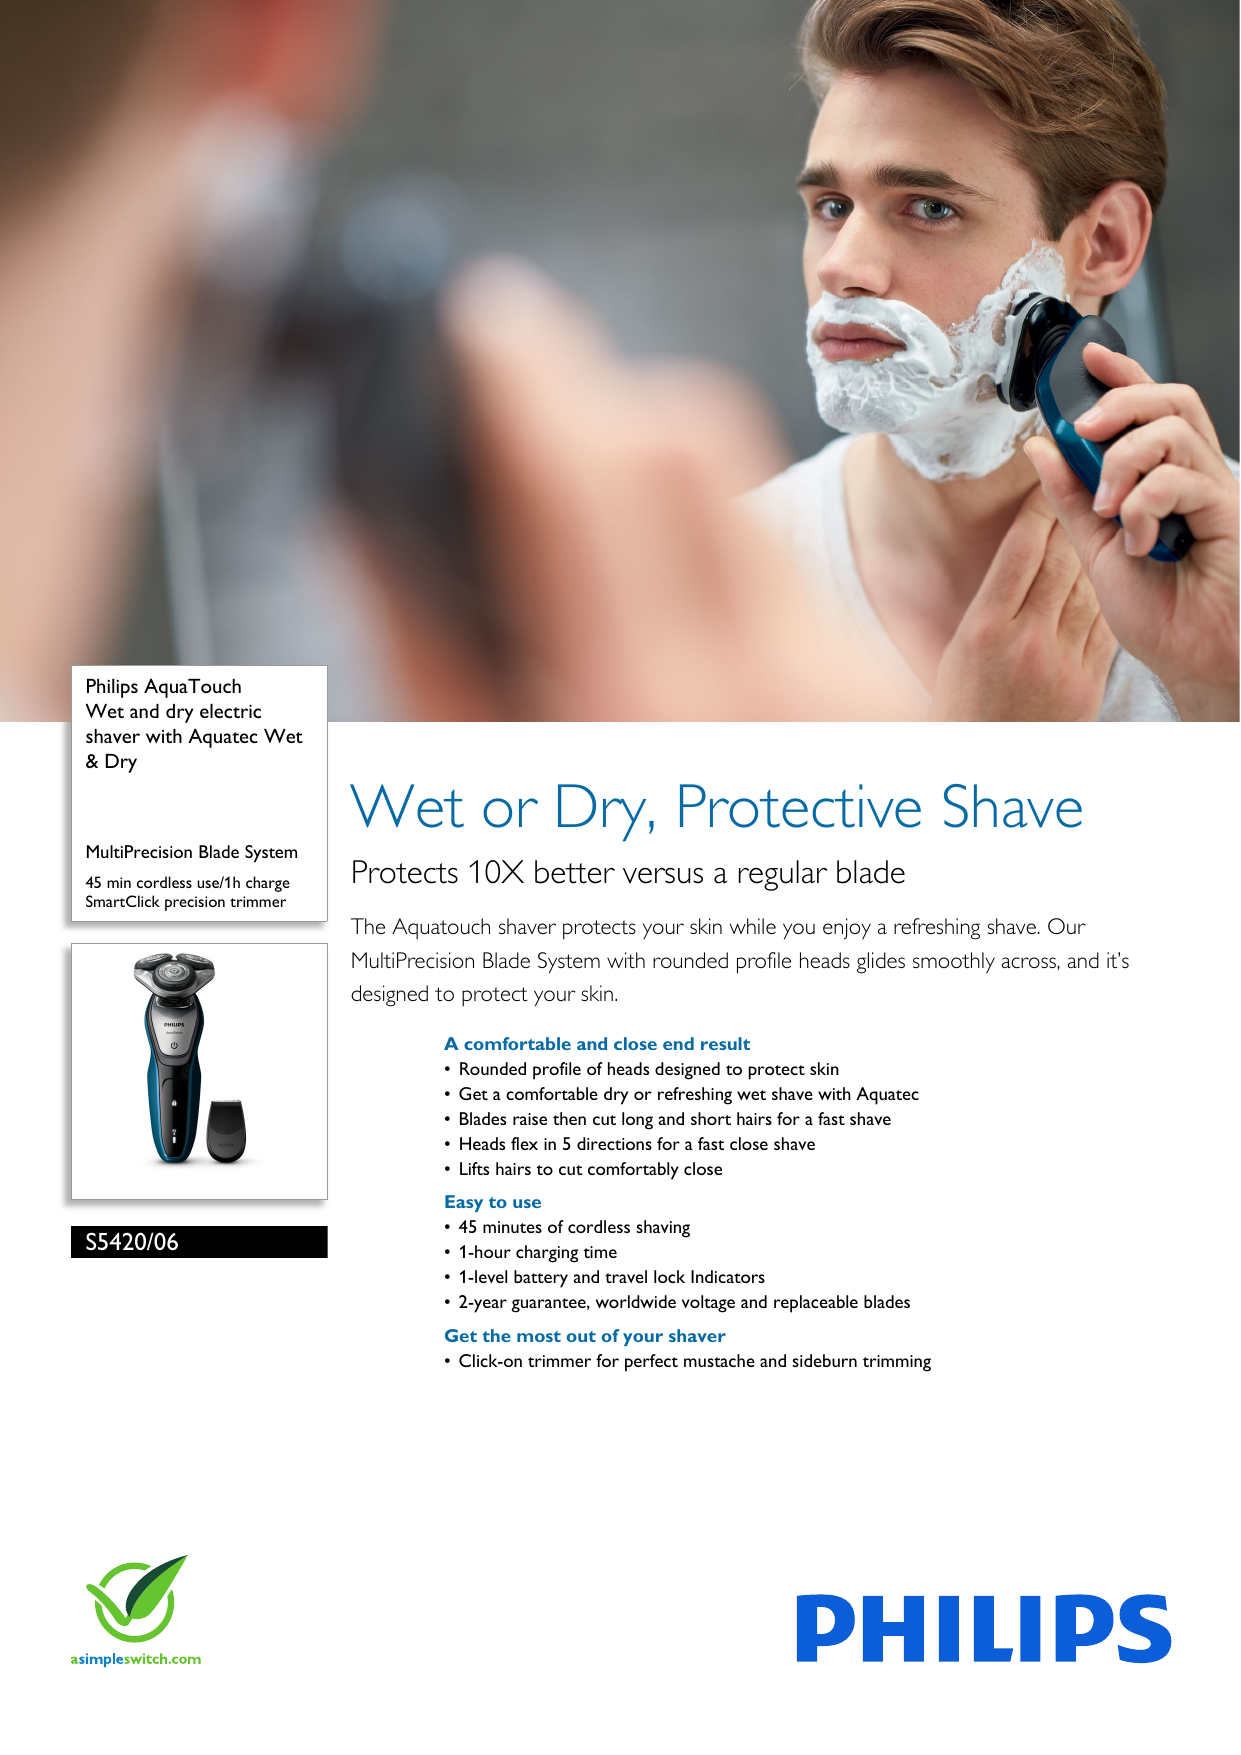 hipotez bıçaklama Tıbbi uygulama hatası  Philips S5420/06 Wet And Dry Electric Shaver With Aquatec & User Manual  Leaflet S5420 06 Pss Aenin